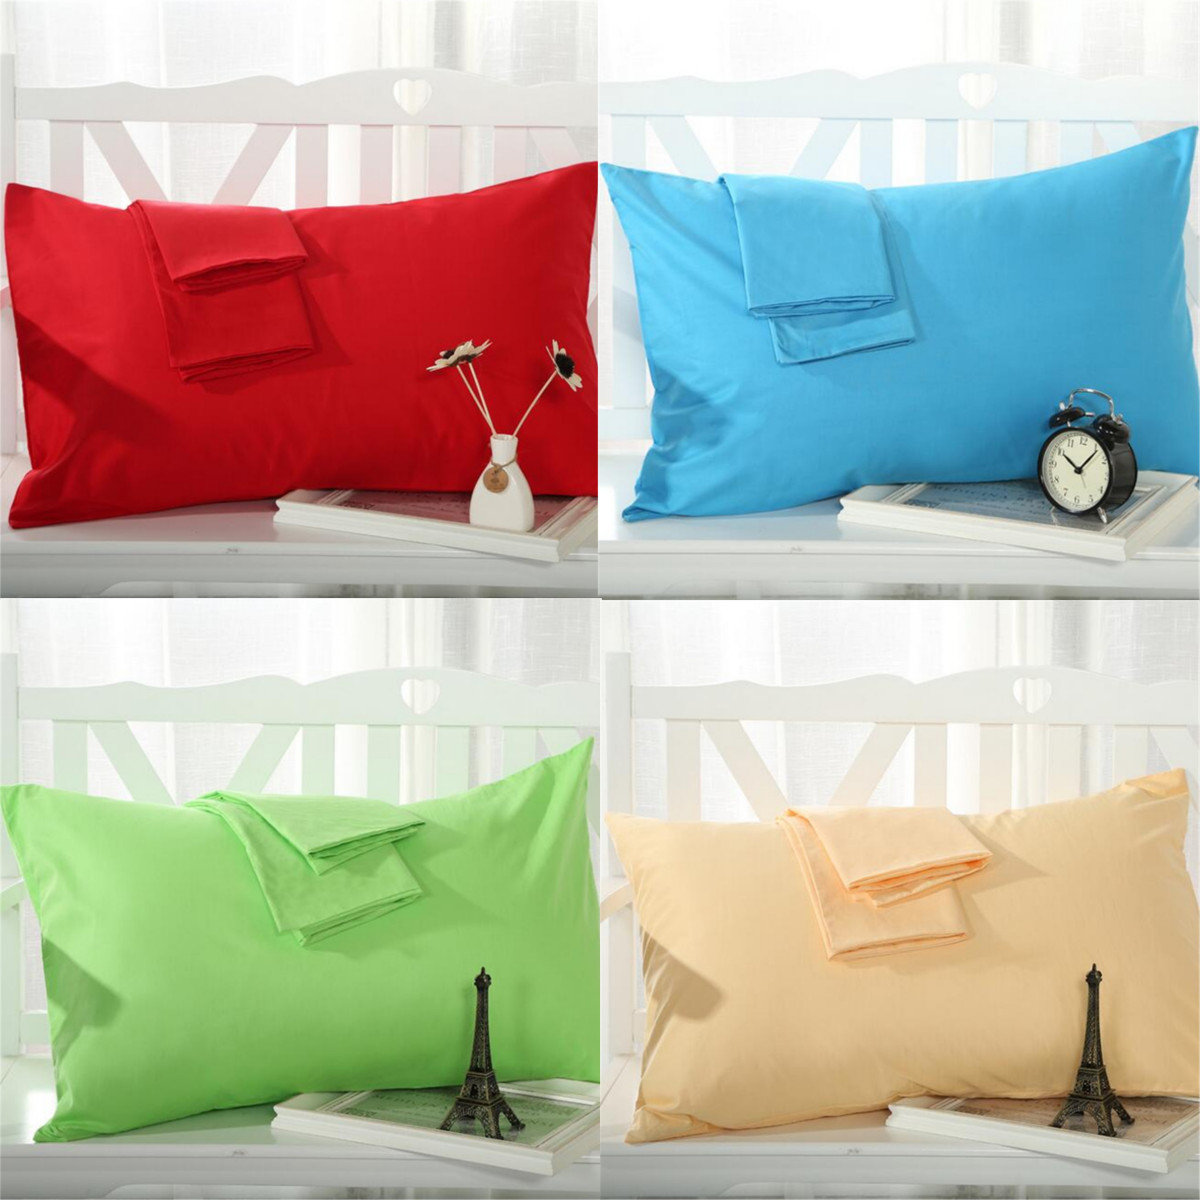 

2 Pcs Cotton Cloth Pillow Case Covers Bed Pillowcase Standard Queen Size